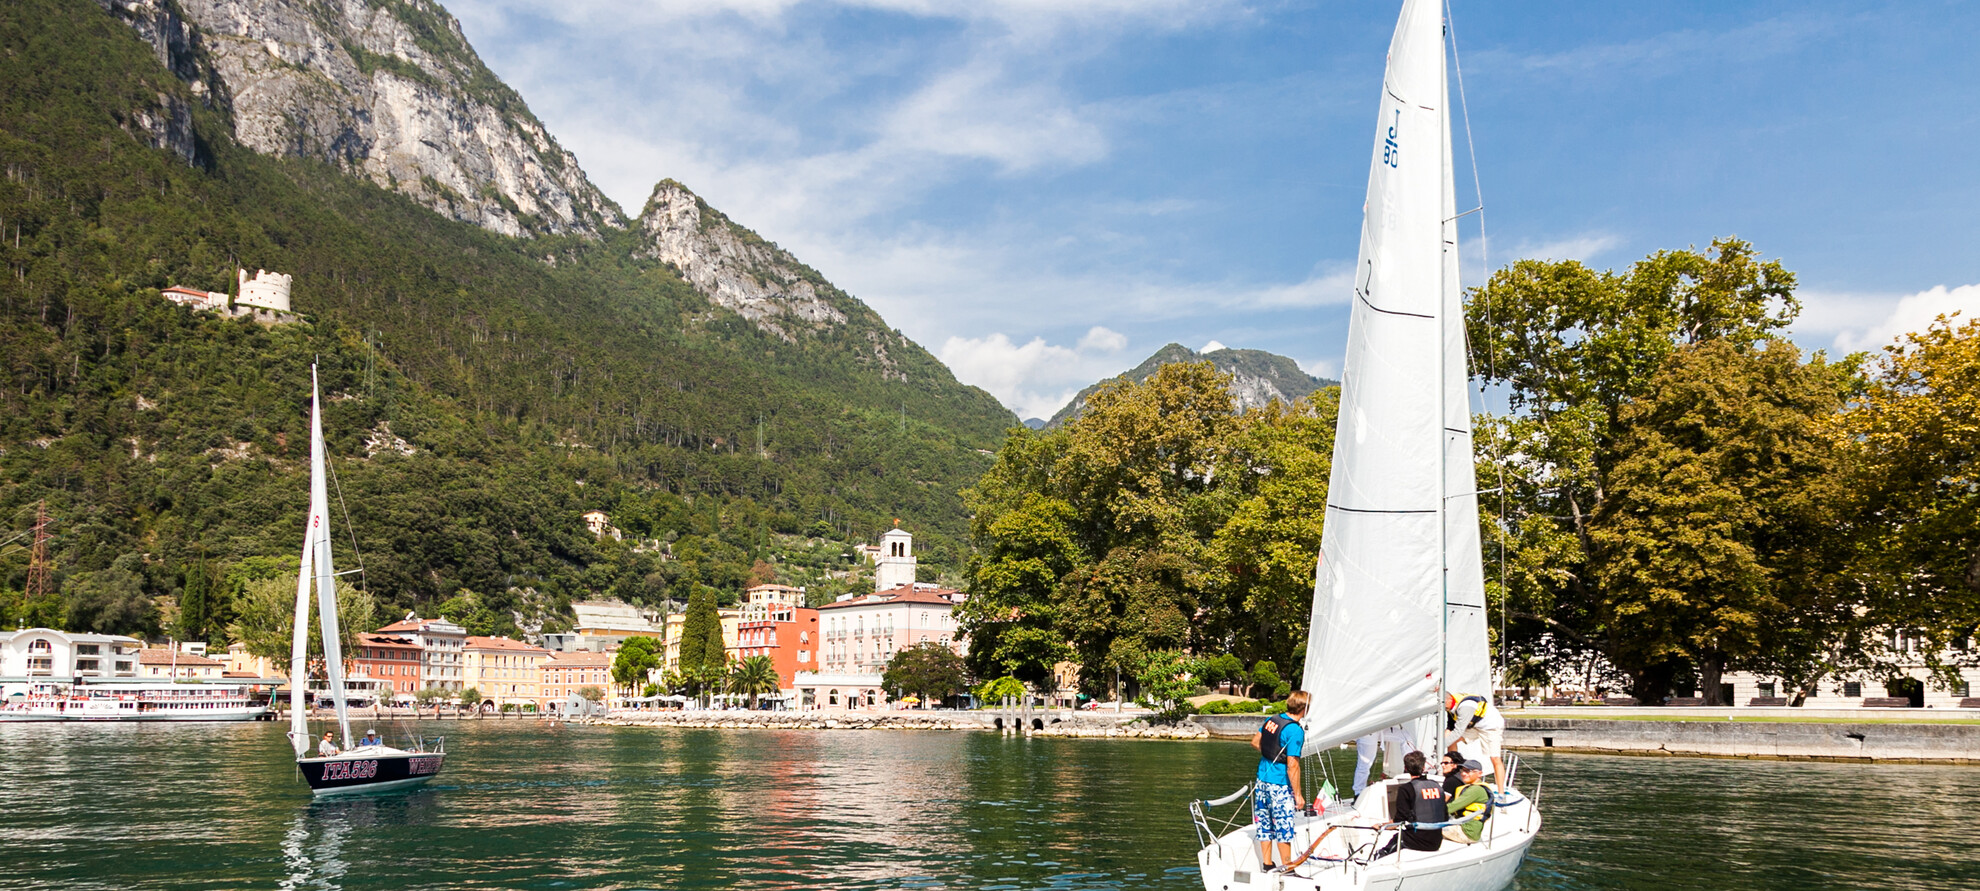 Riva del Garda - Sailing and windsurfing all year round